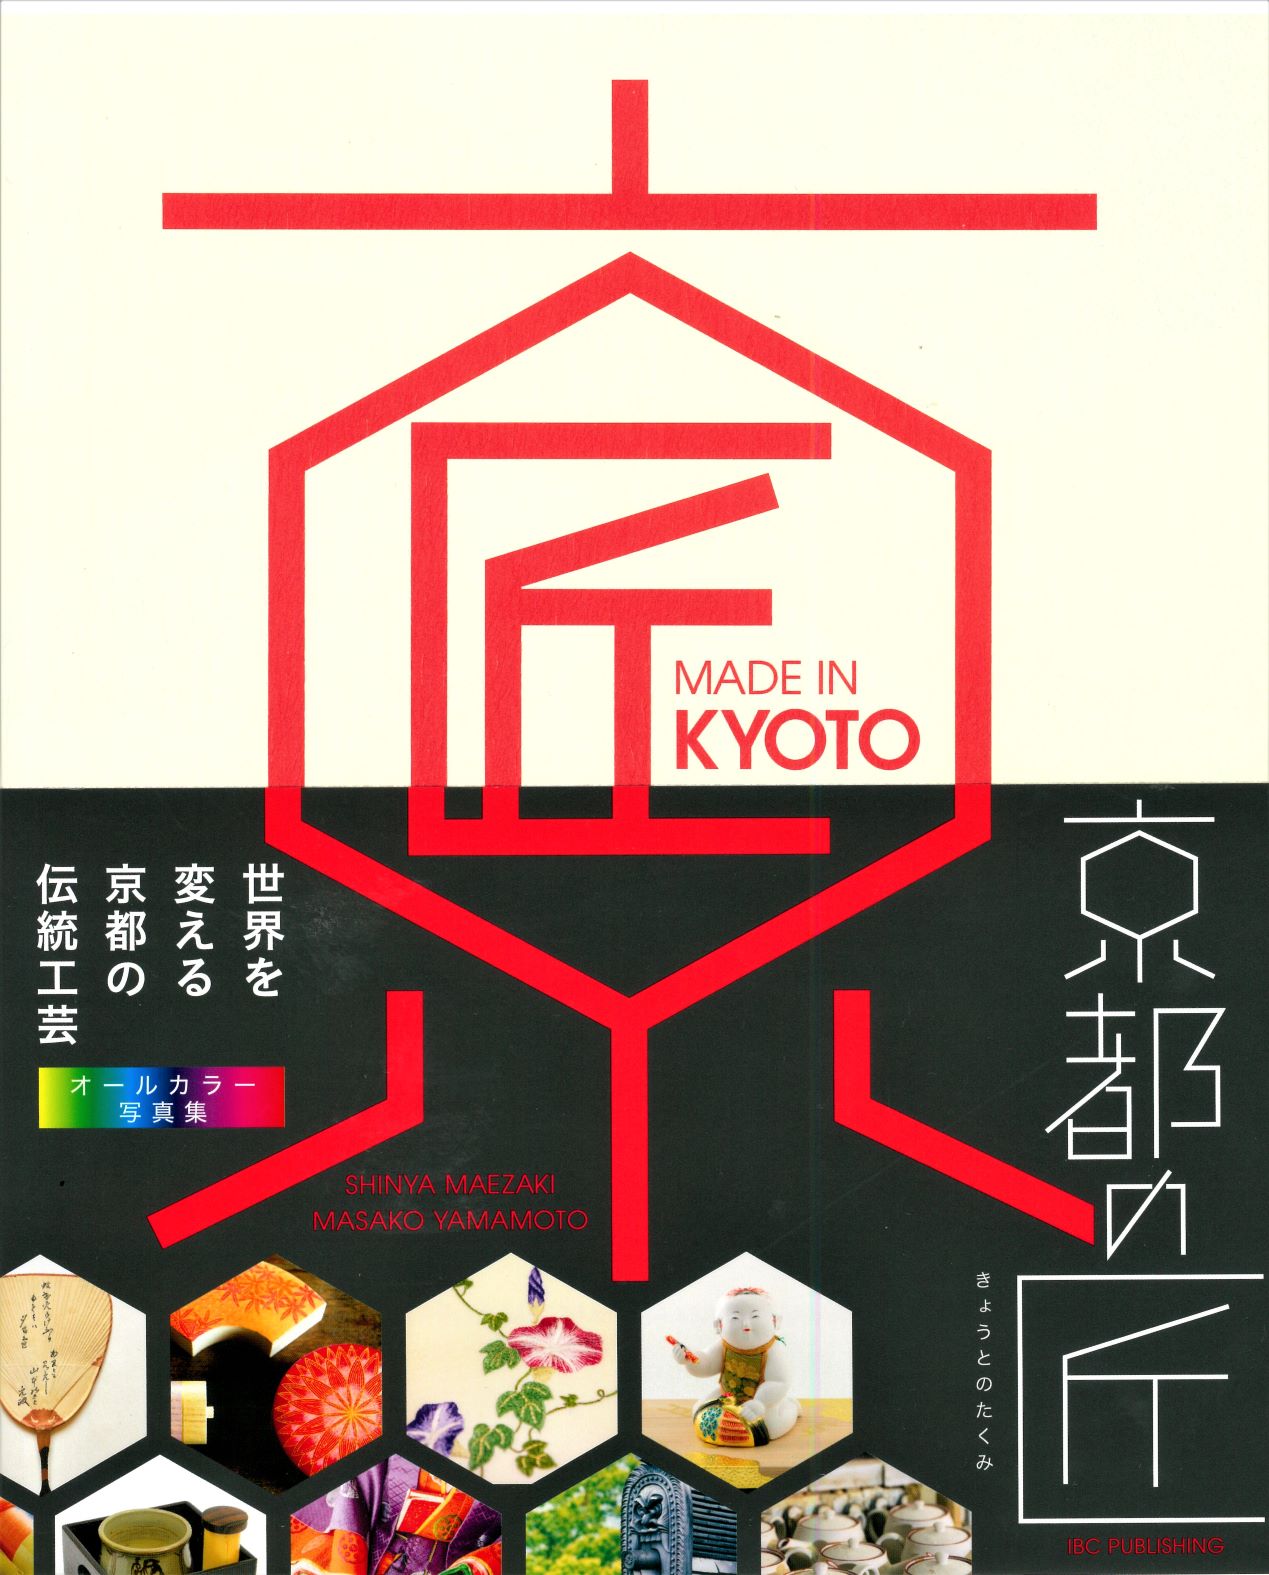 The Book『MADE IN KYOTO』 (Editors: Shinya Maezaki/ Visiting Collaborative Researcher & Masako Yamamoto) has been published